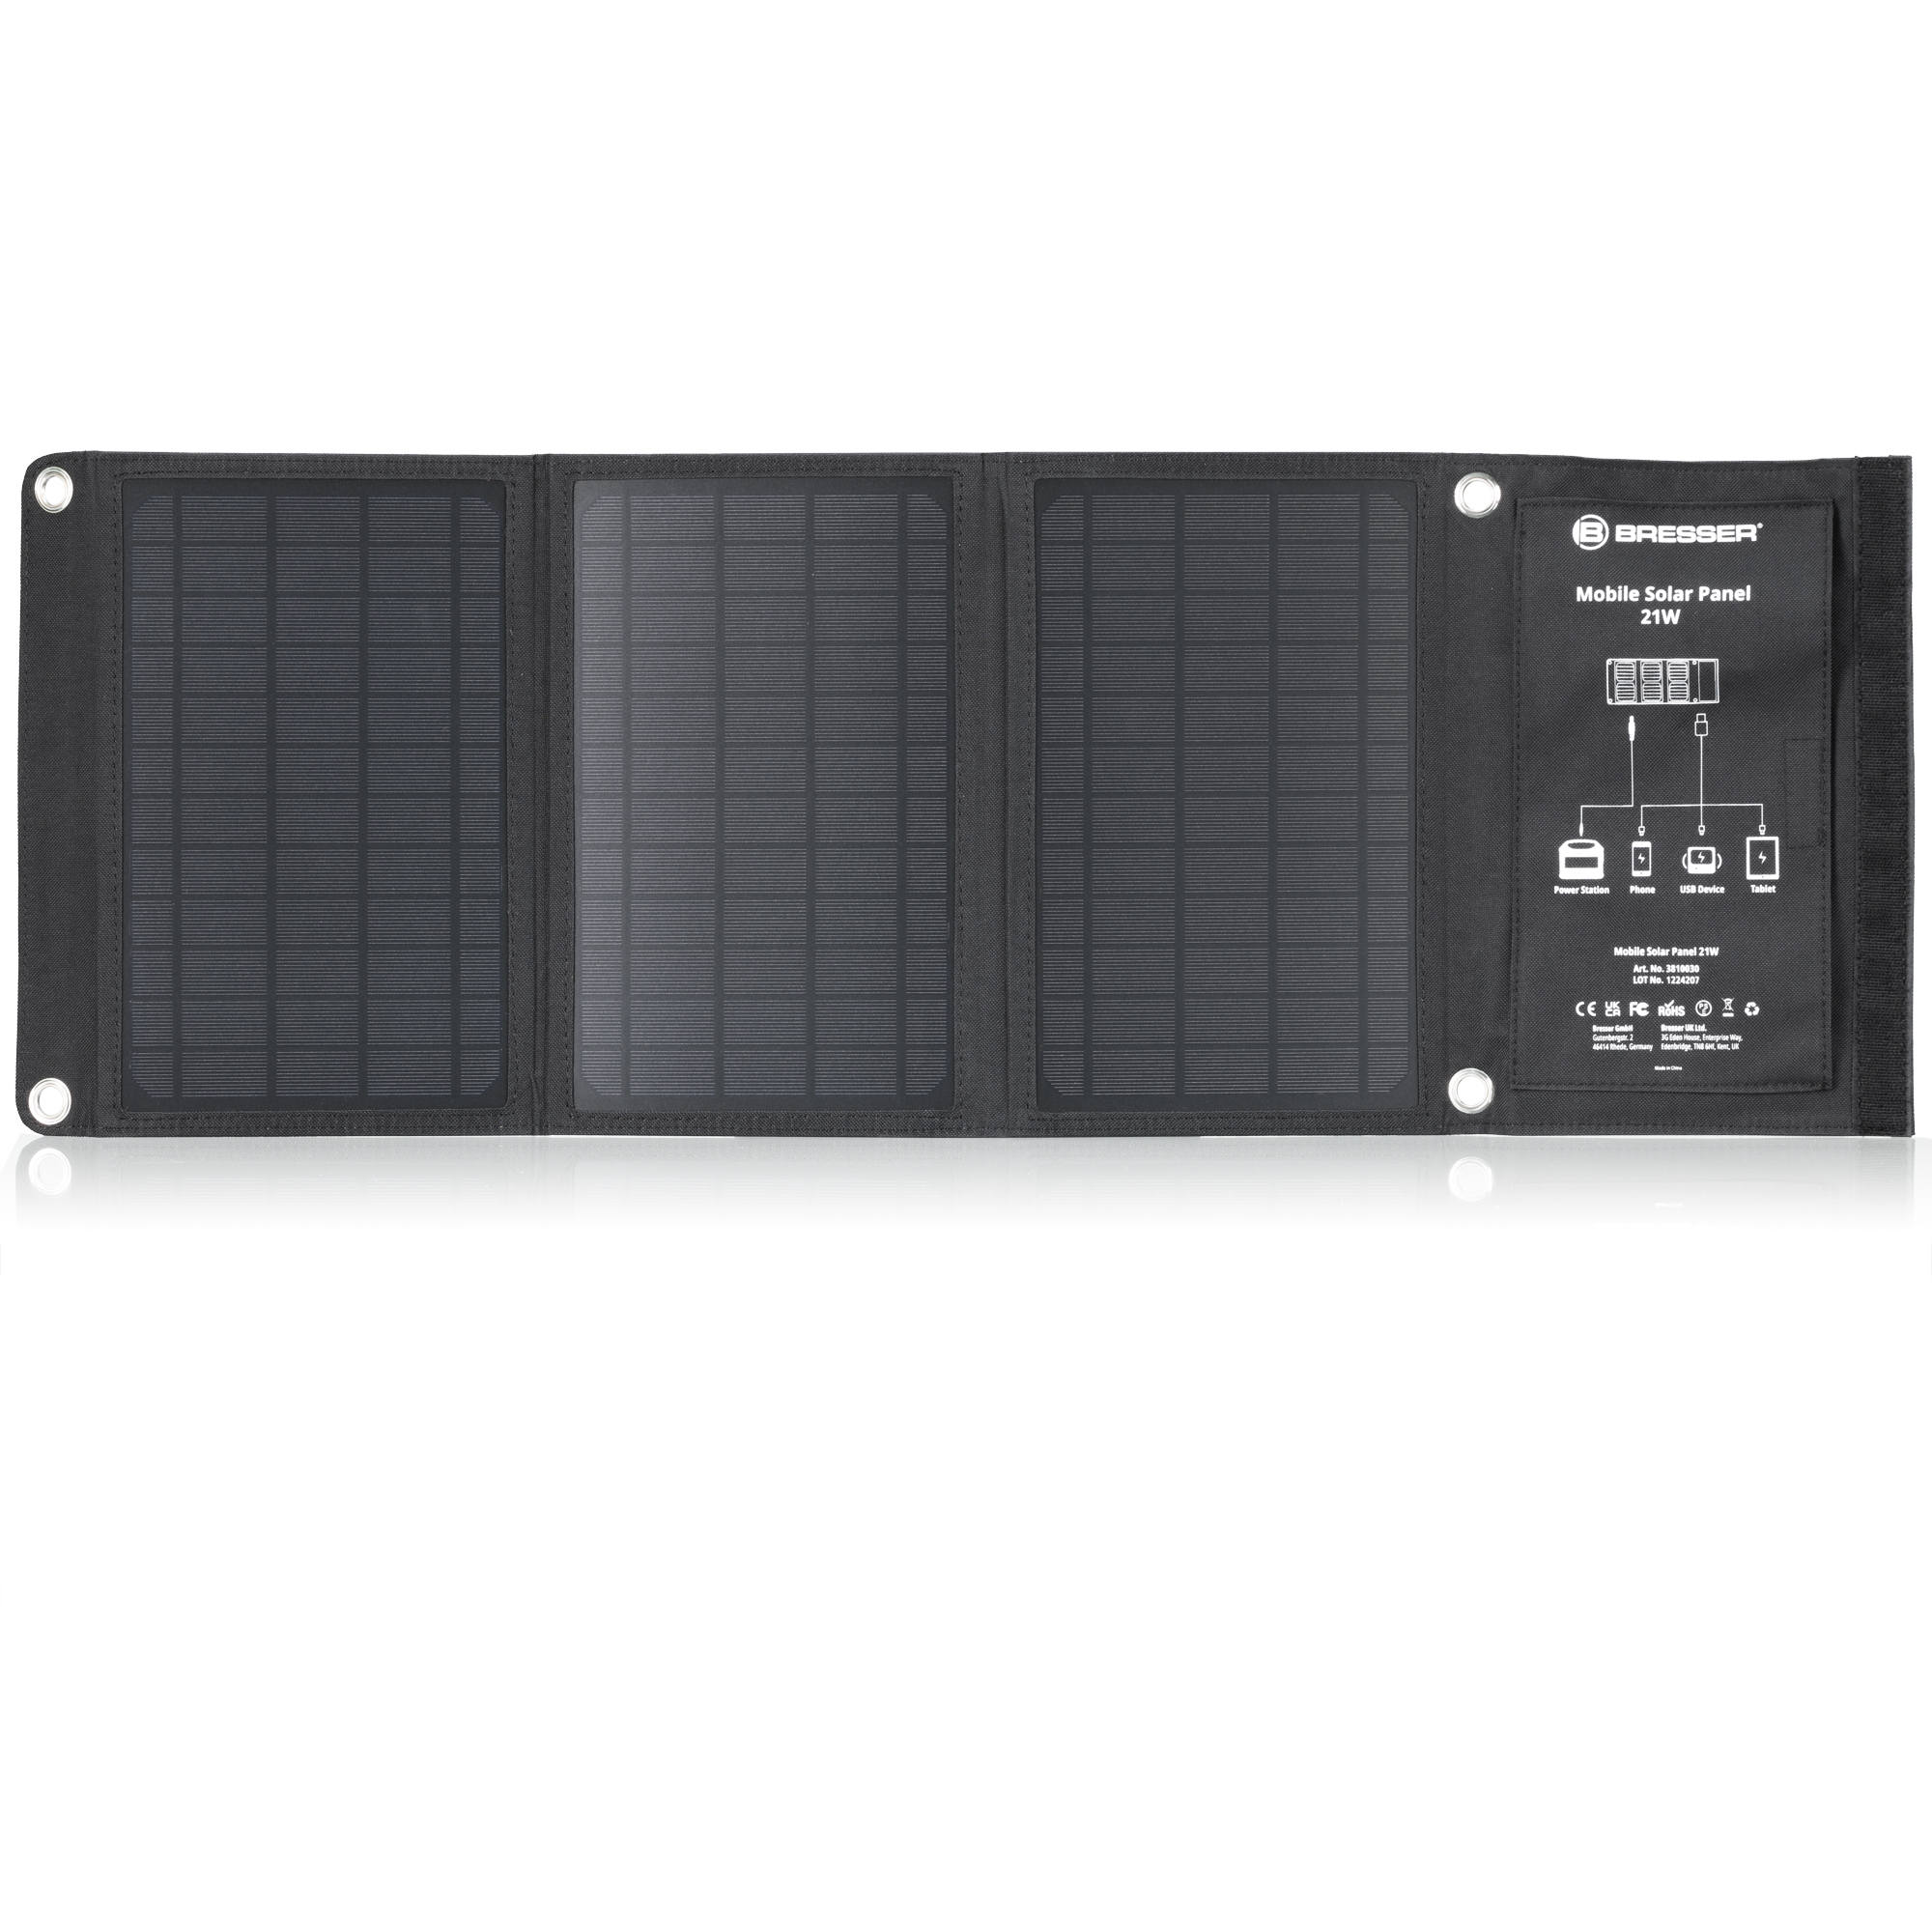 BRESSER Mobiles Solar-Ladegerät 21 Watt mit USB- u. DC-Anschluss (Refurbished)